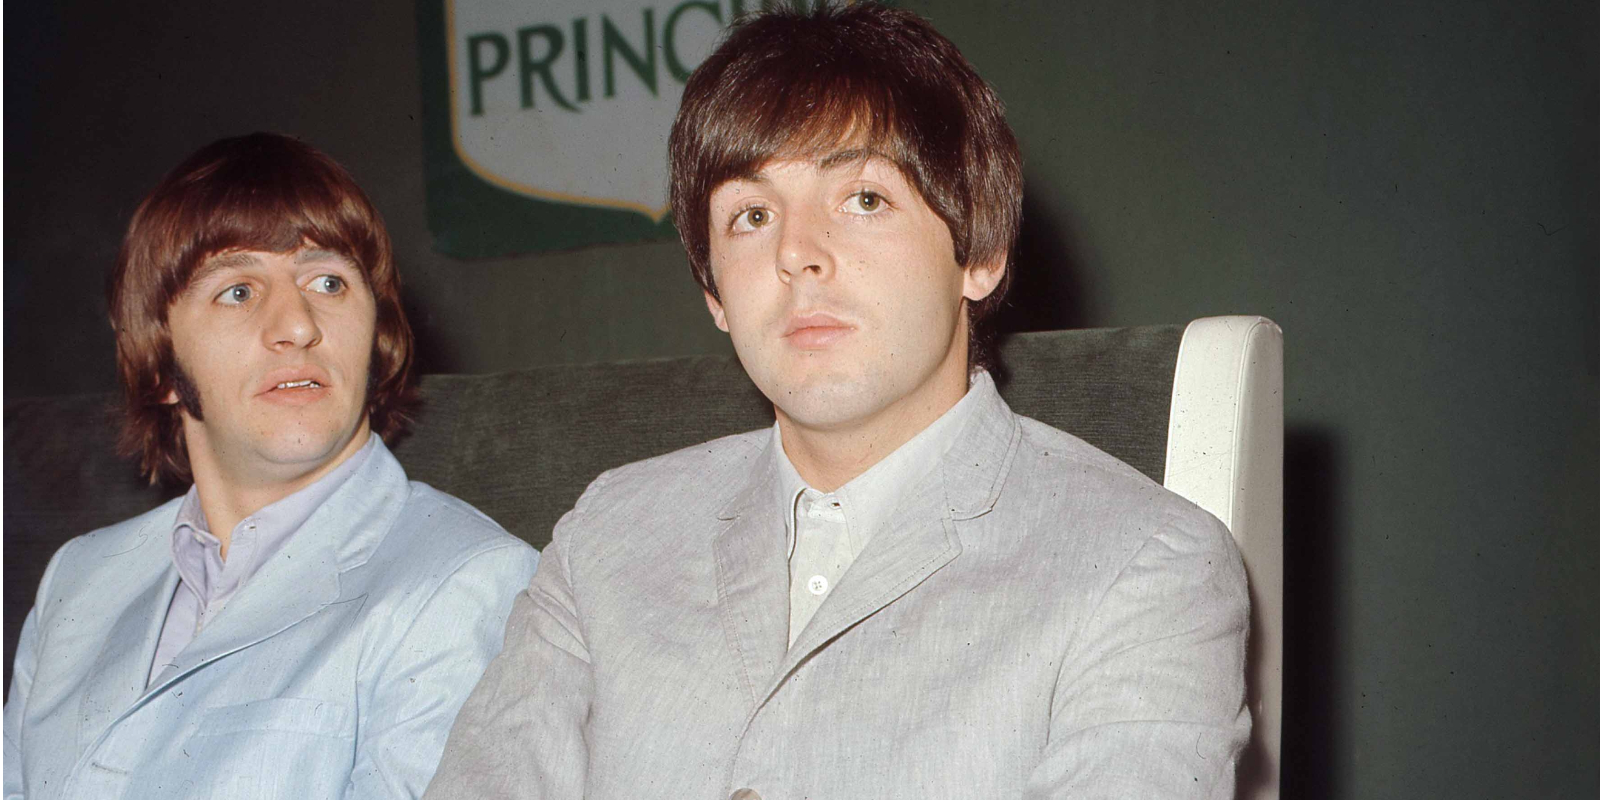 Ringo Starr and Paul McCartney at the 'Parco dei Principi Grand Hotel', Rome 1965.